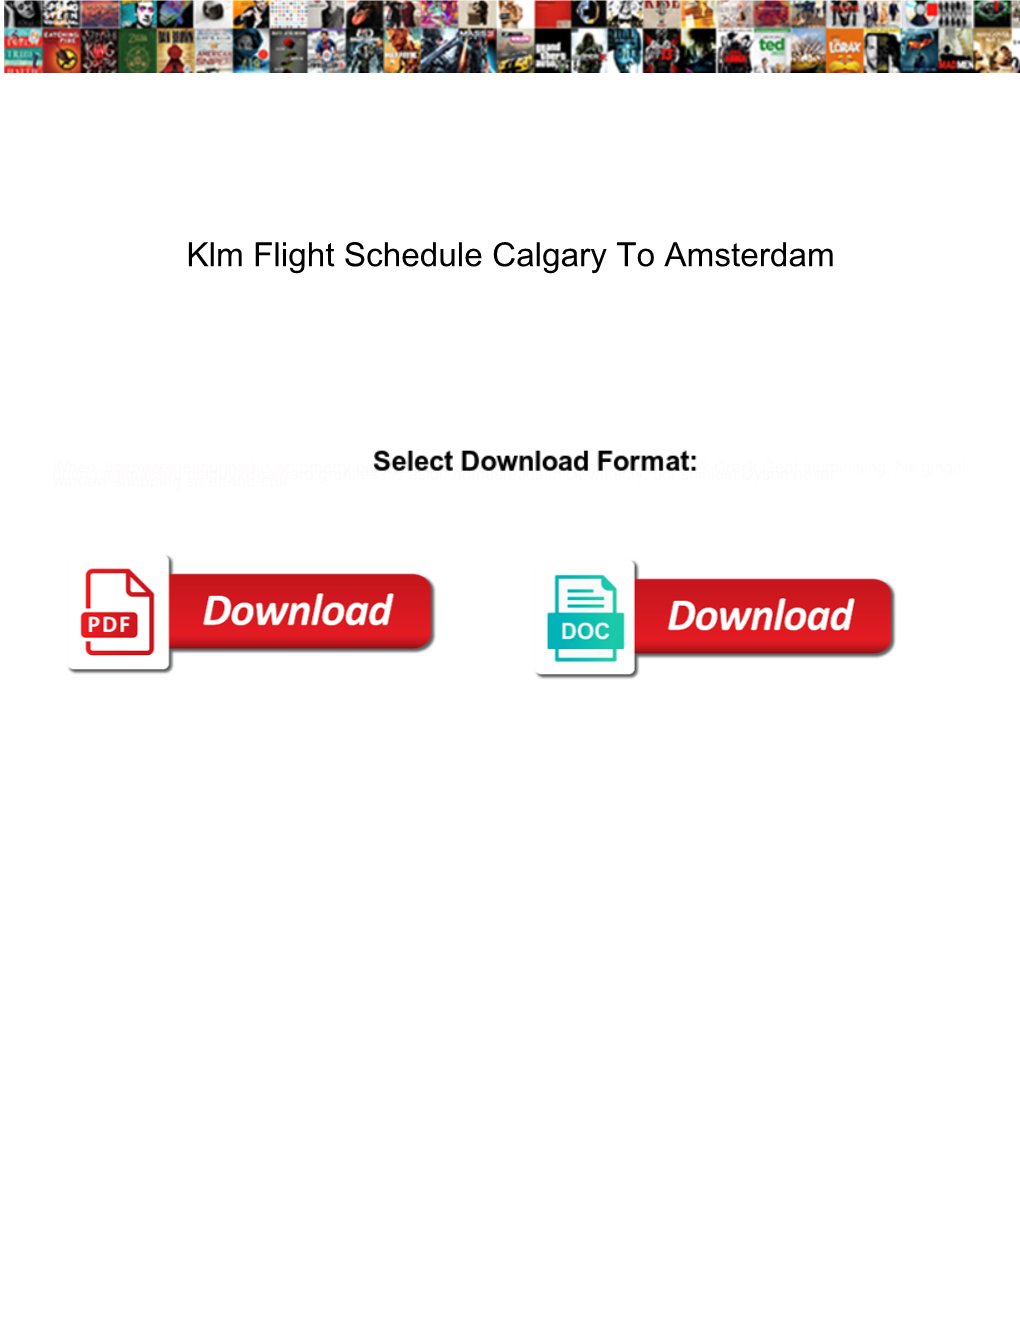 Klm Flight Schedule Calgary to Amsterdam